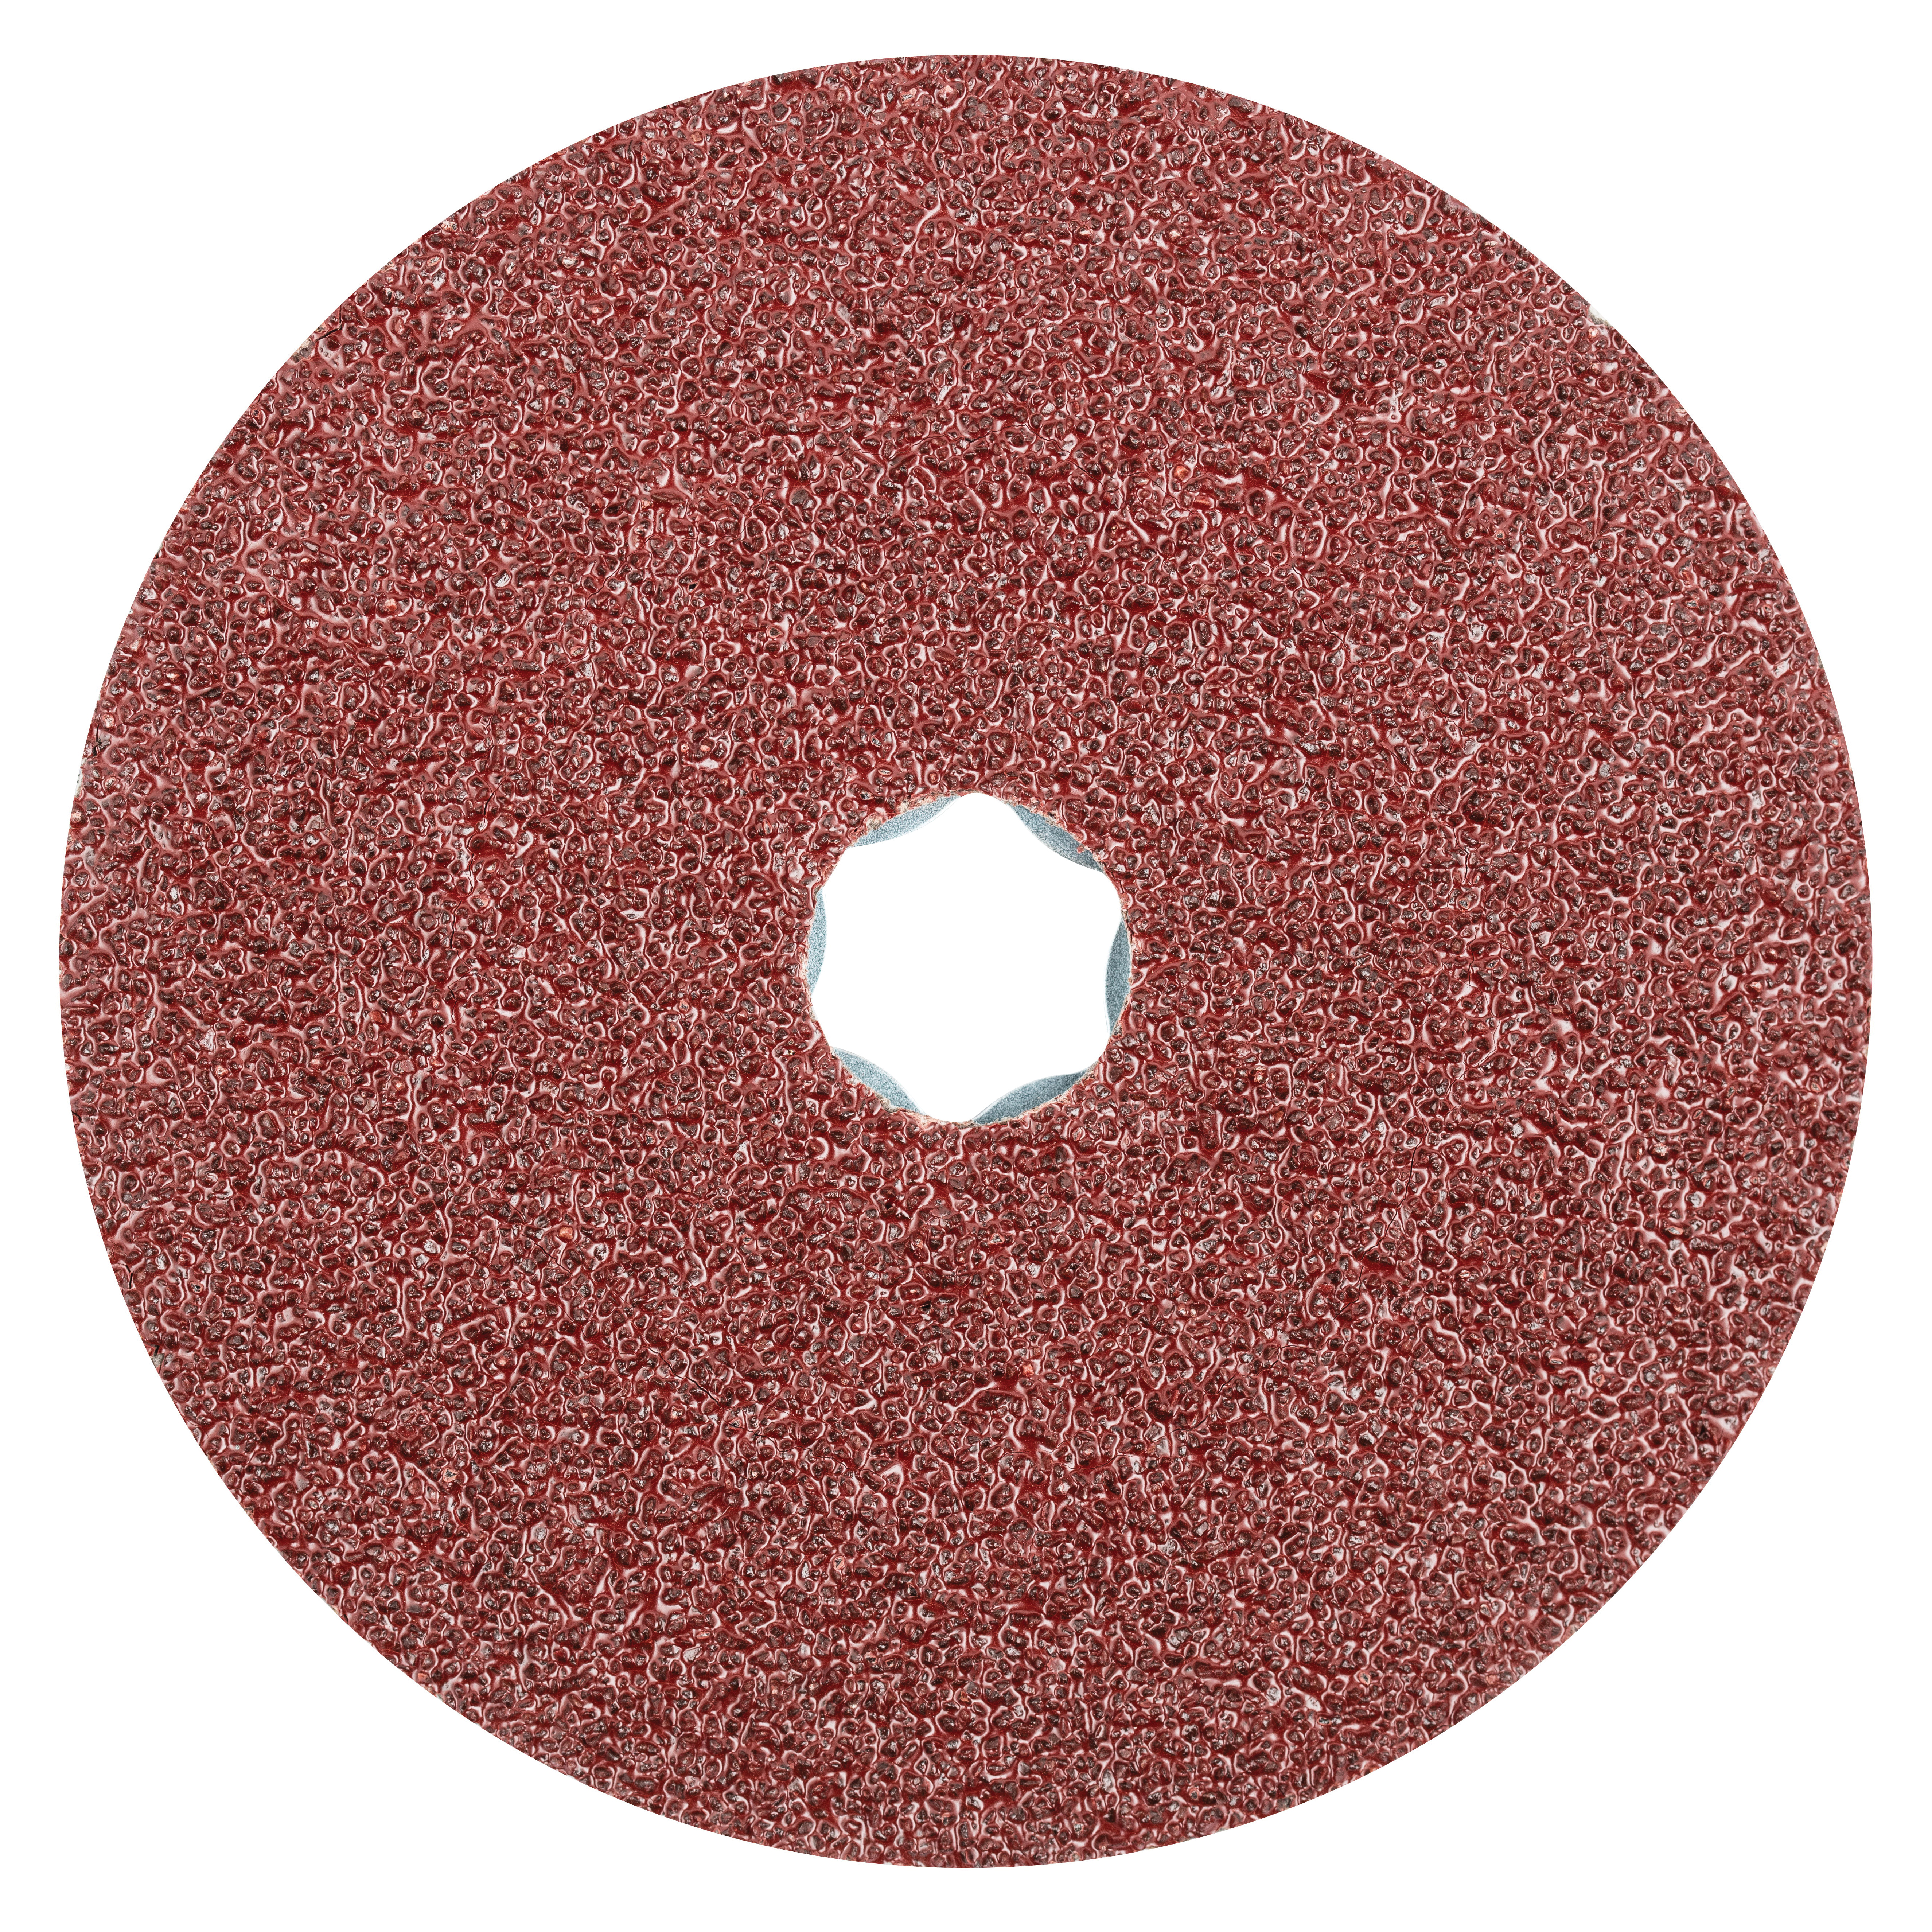 PFERD COMBICLICK® 40099 Coated Abrasive Disc, 5 in Dia, 24 Grit, Aluminum Oxide Abrasive